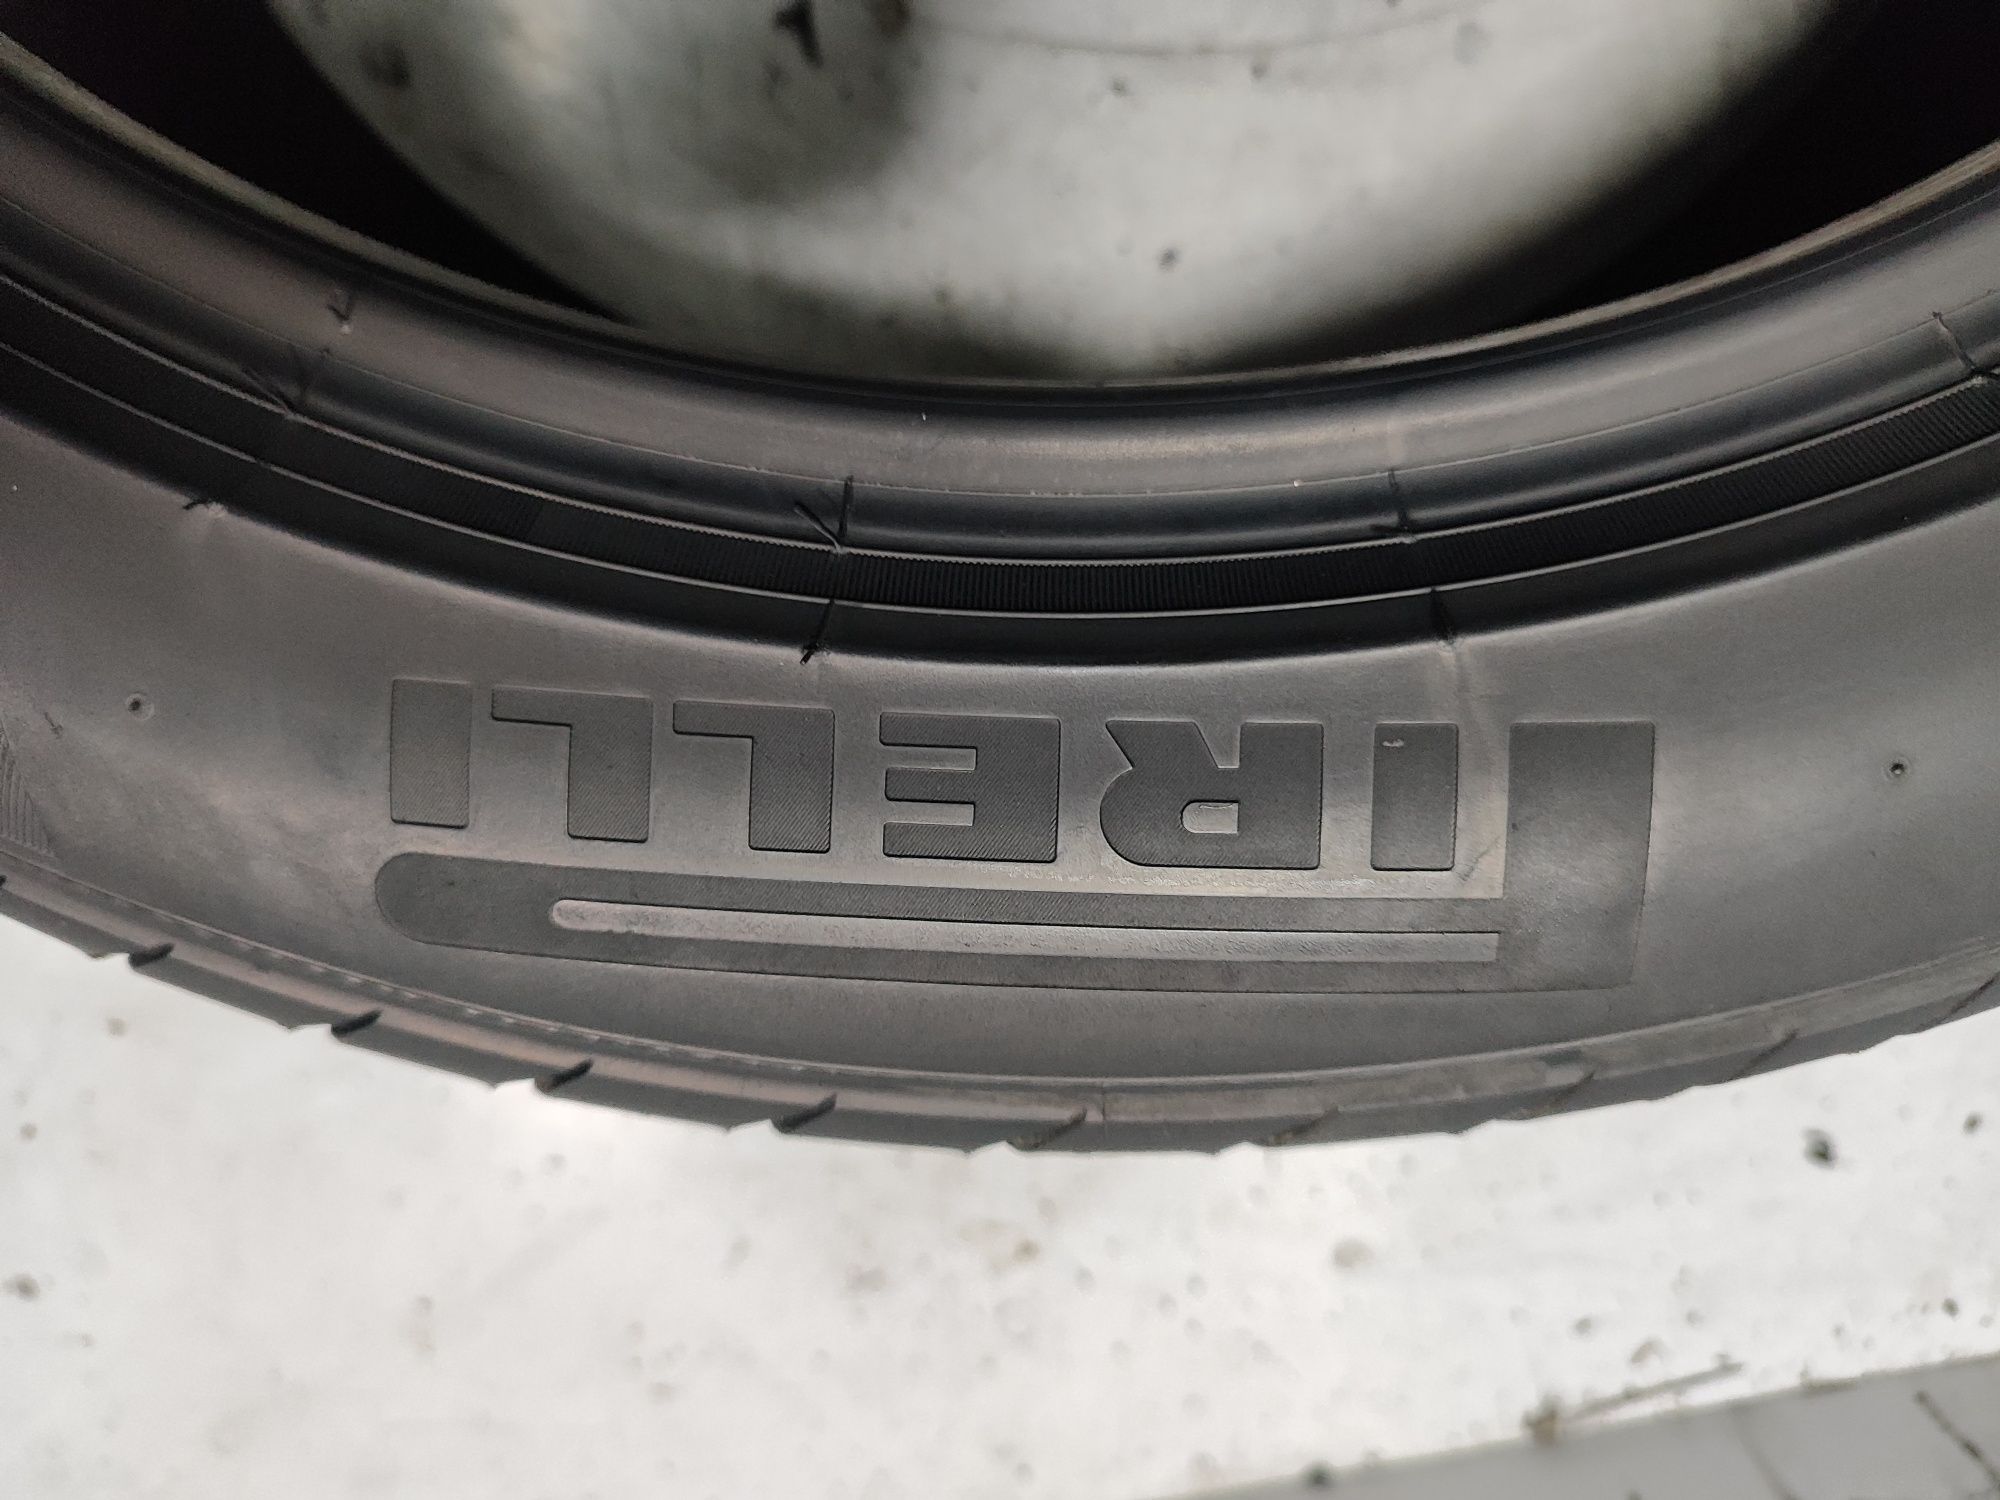 2 pneus semi novos Pirelli P Zero 245/45R18 100Y Oferta dos portes